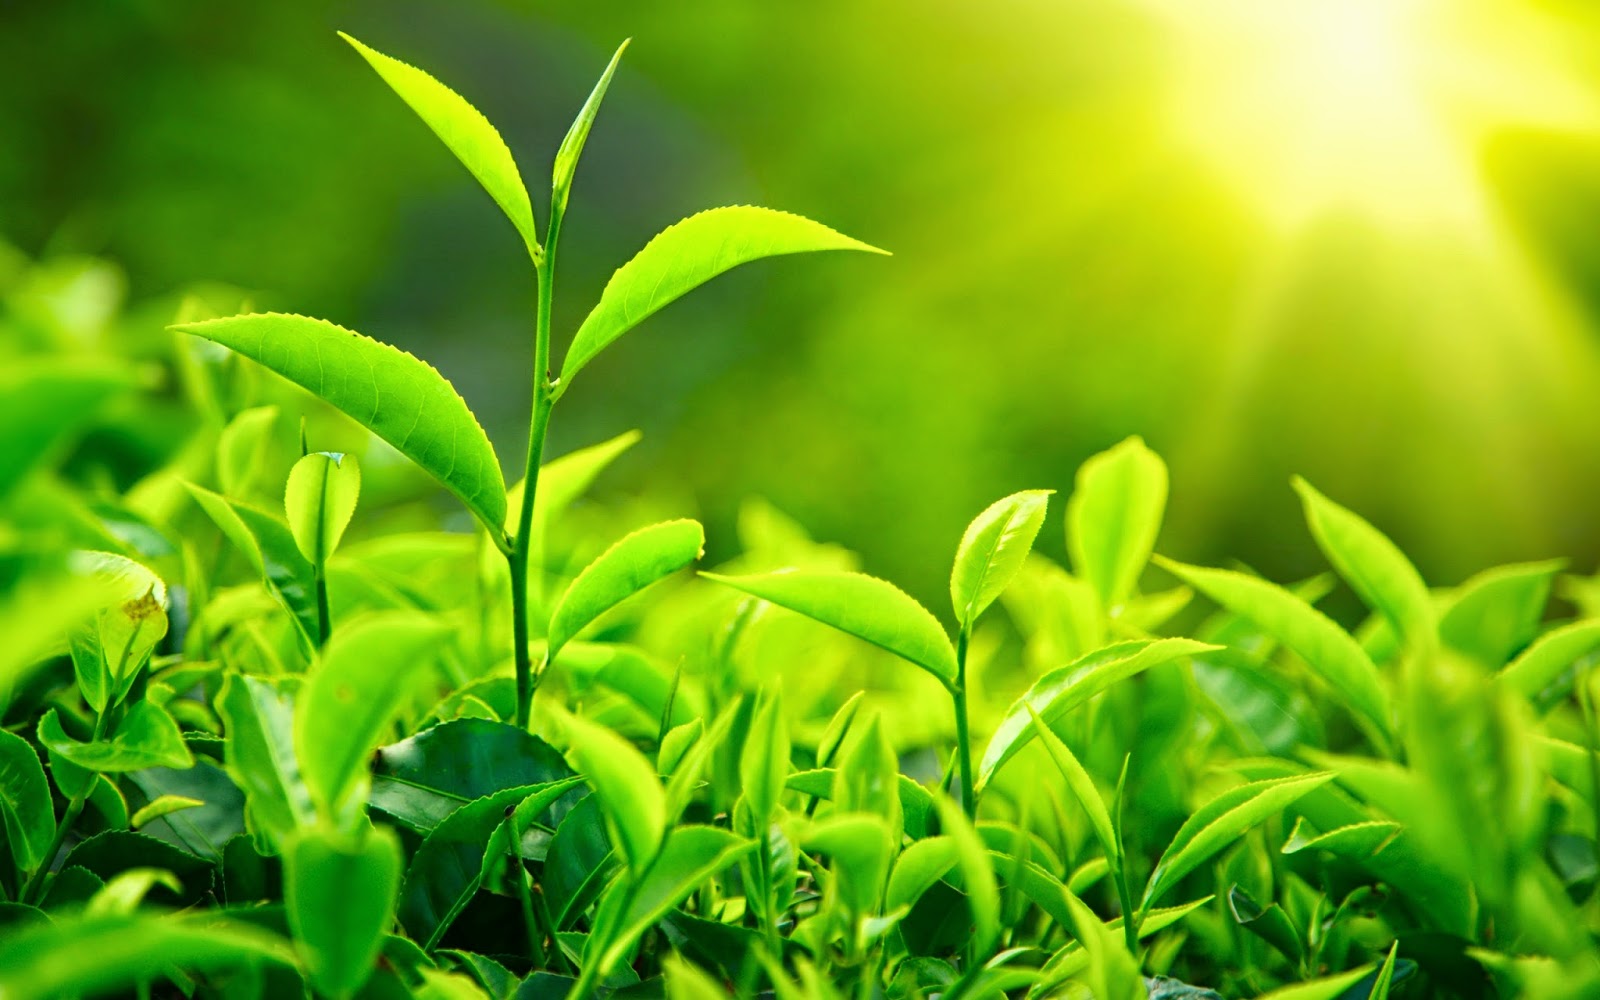 http://healthfitnessrevolution.com/new-study-shows-green-tea-boosts-working-memory/